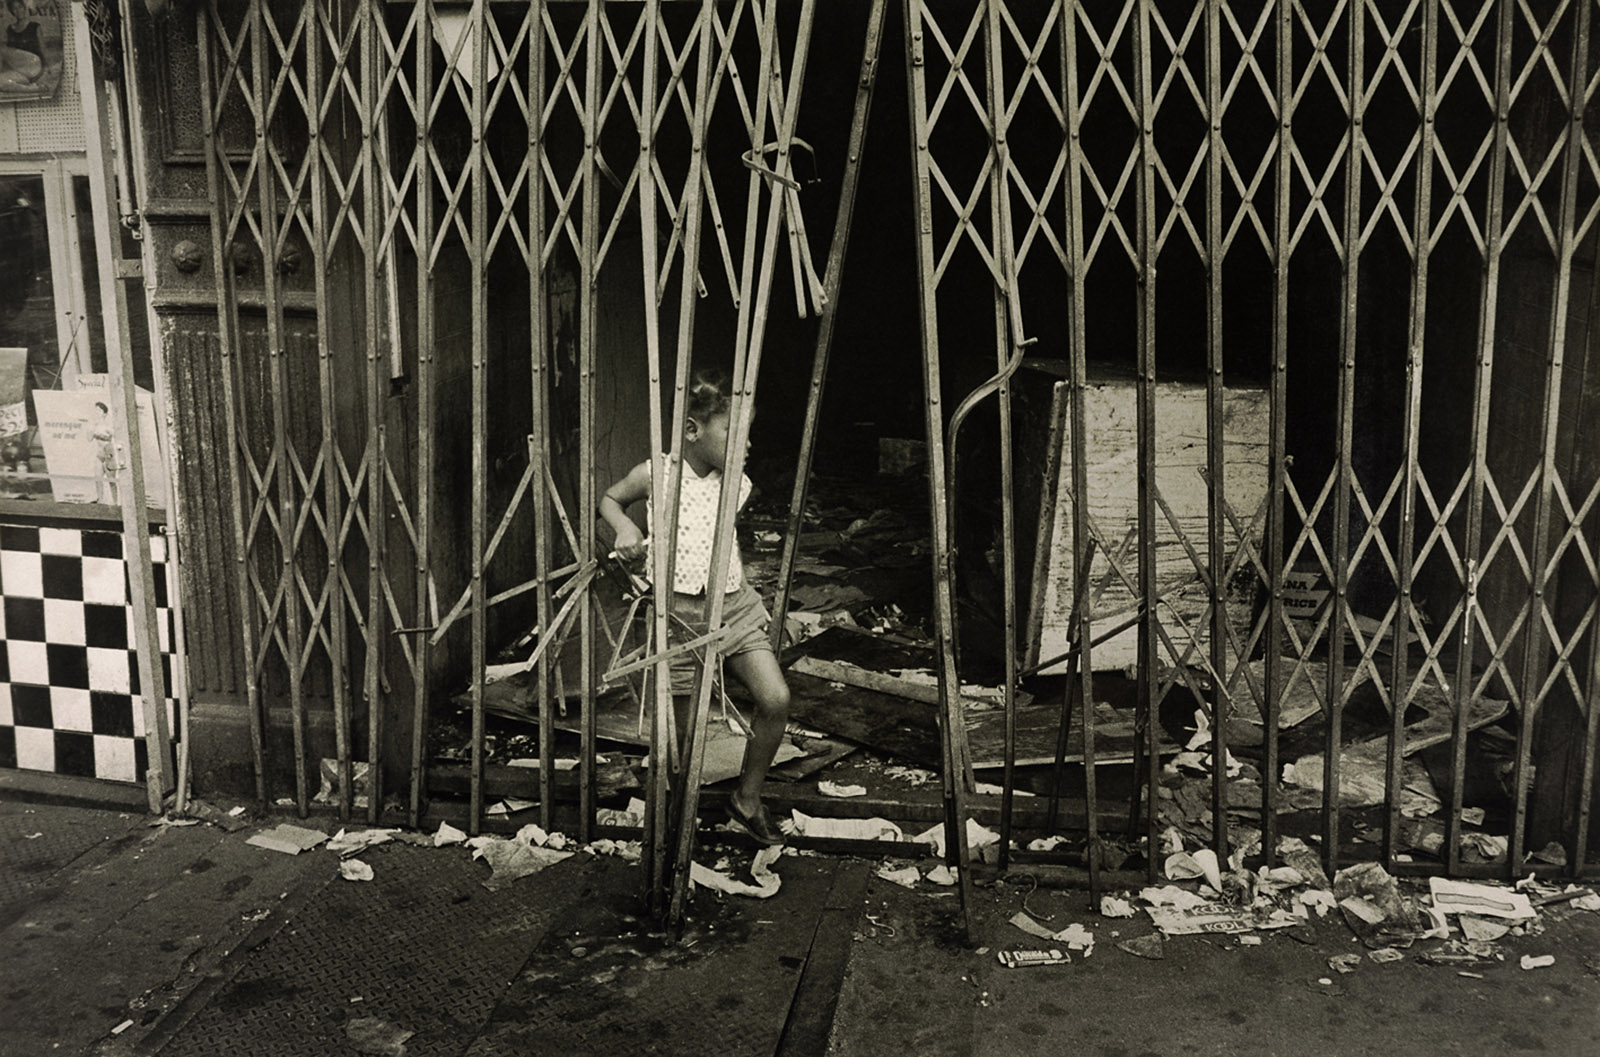 Criança brincando em meio ao lixo (Child Playing in the Trash), 1961, Henri Ballot. Gelatin silver print, 7.1 x 9.5 in. Copyright Instituto Moreira Salles Collection